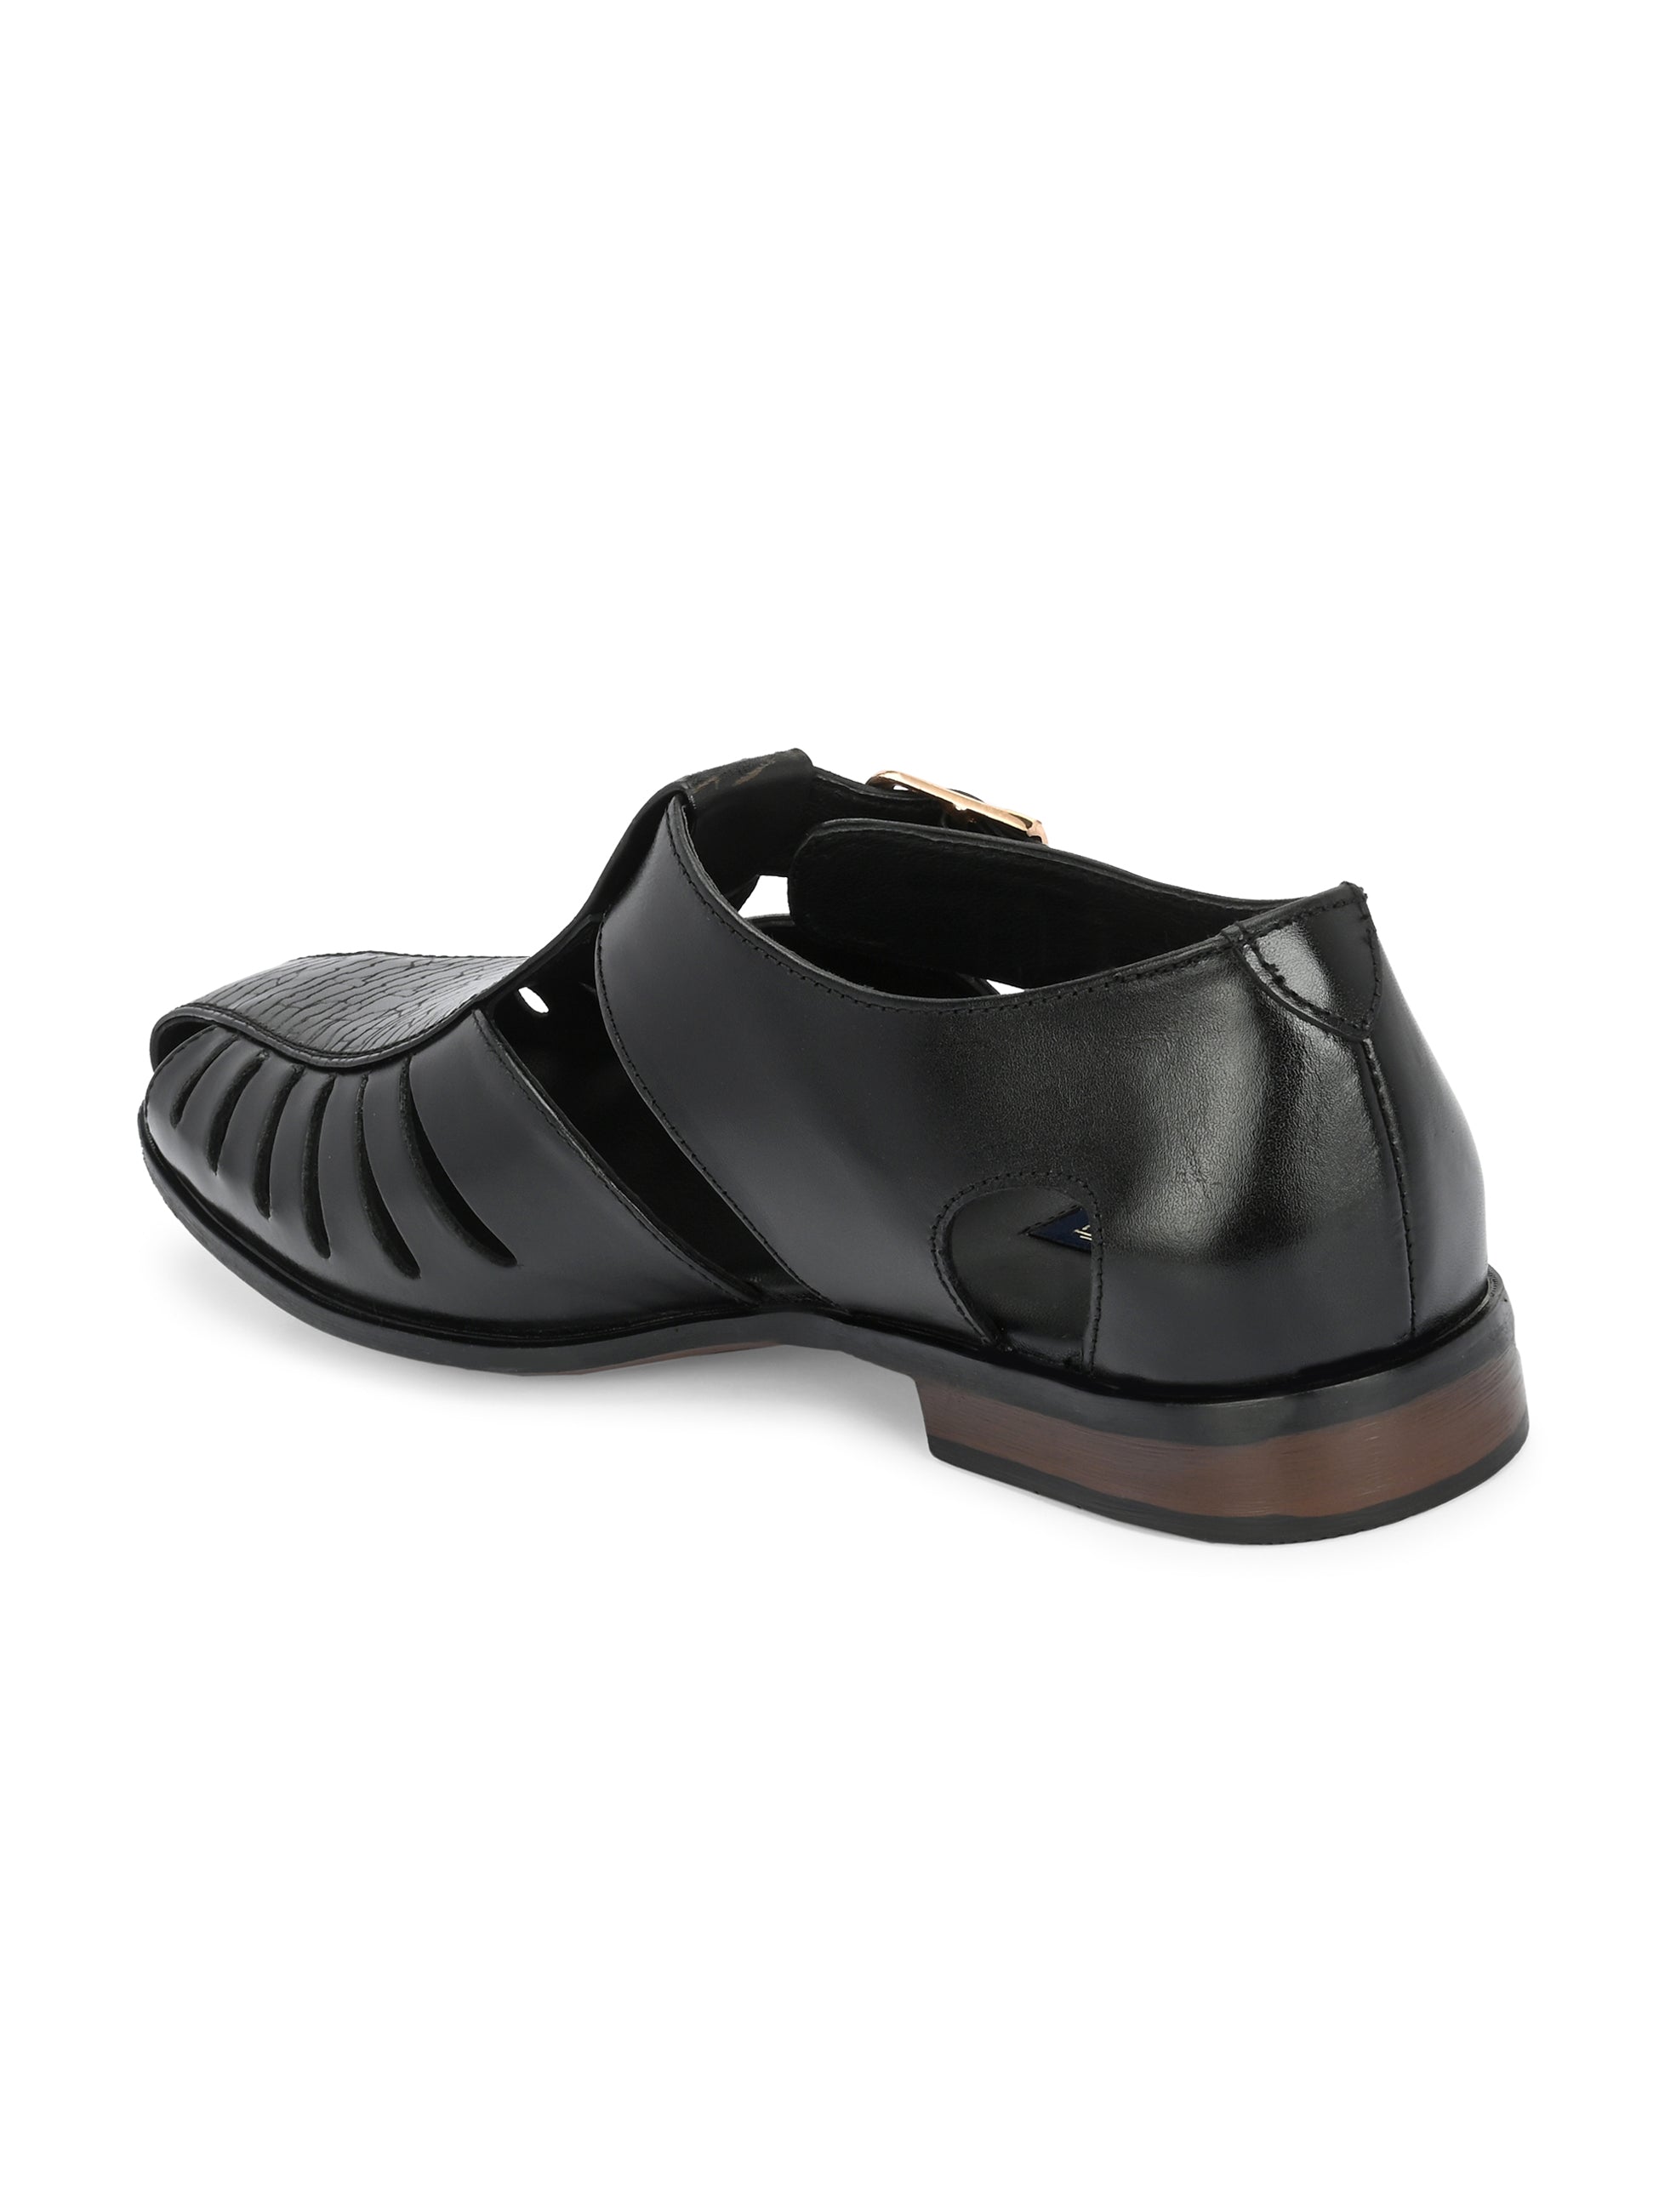 ﻿Egoss Peshawari Sandals For Men